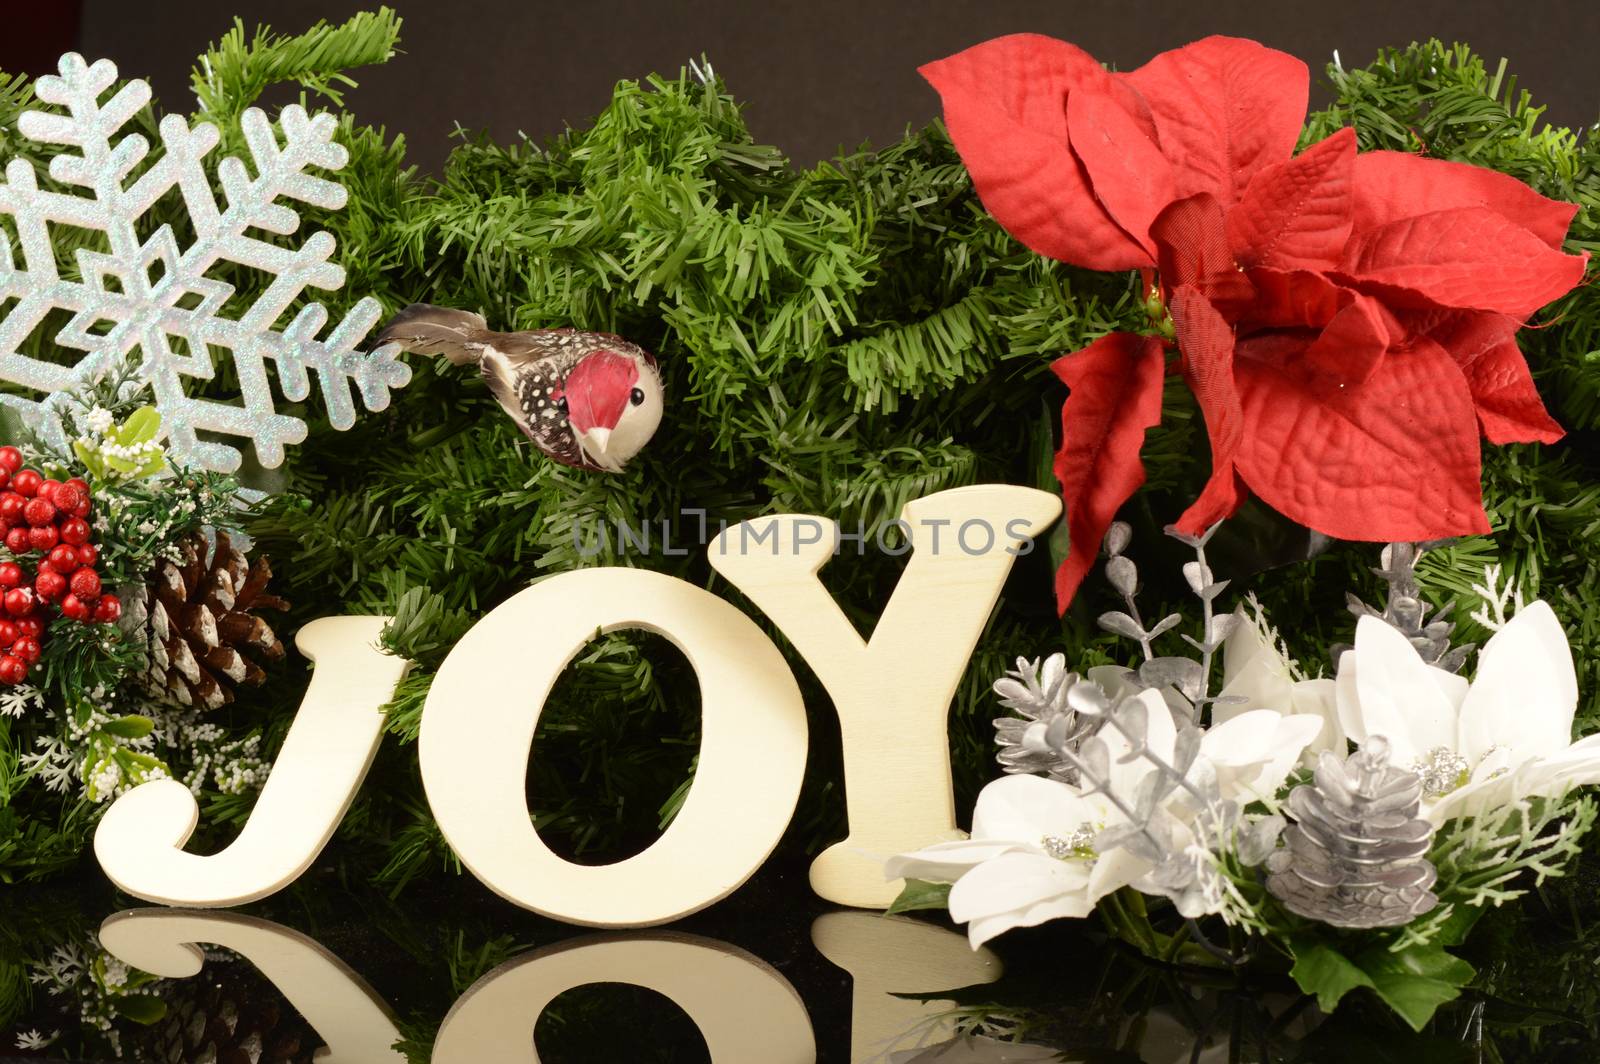 A festive holiday scene with a joyful expression.